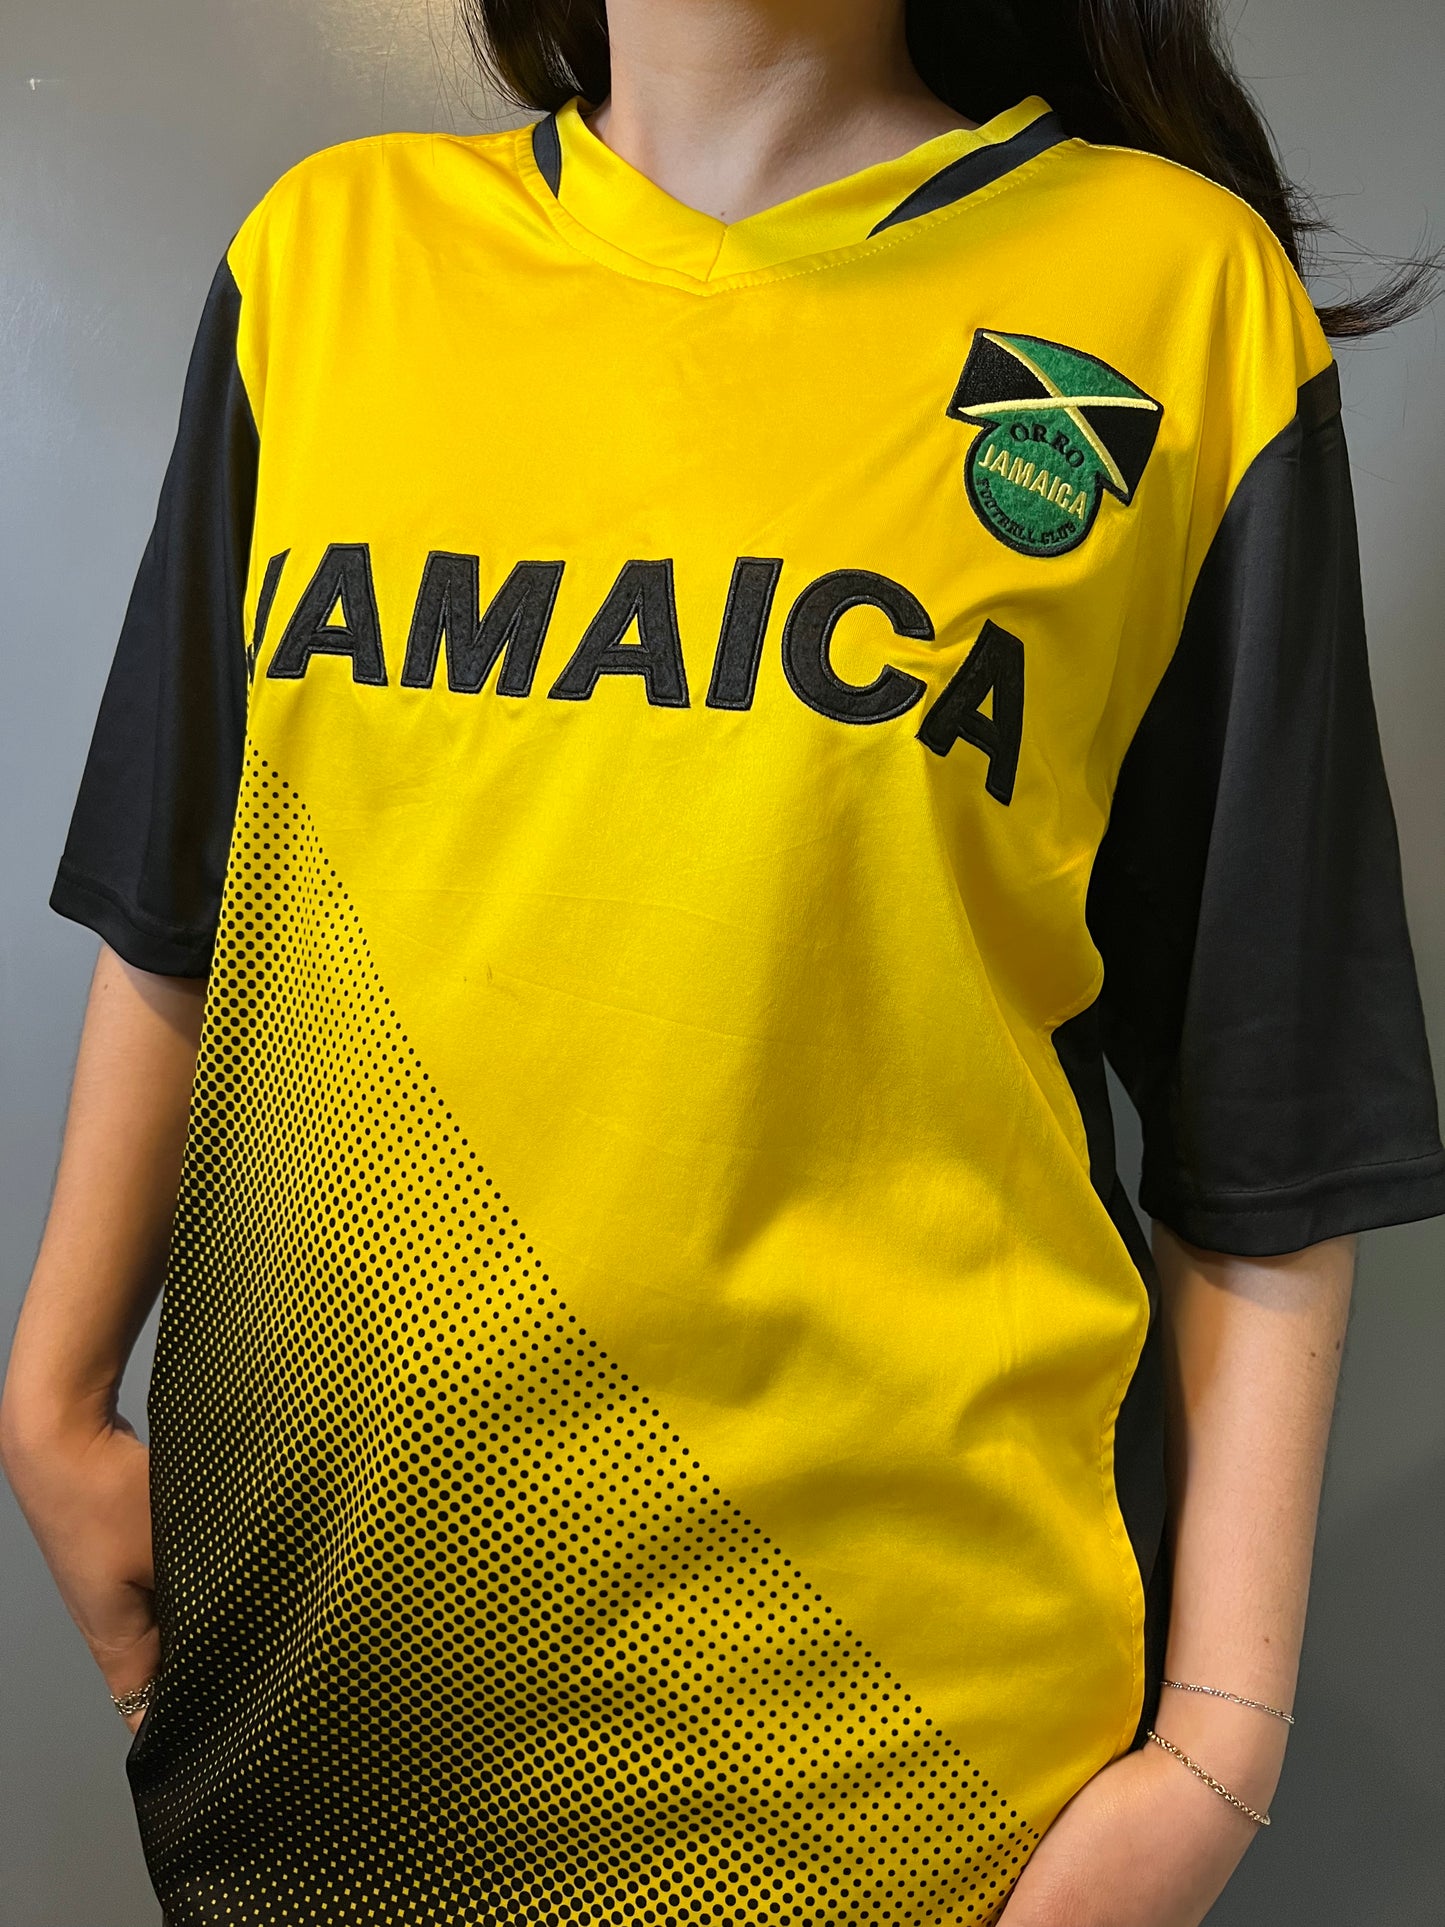 Orro Jamaica Football Club Jersey - M